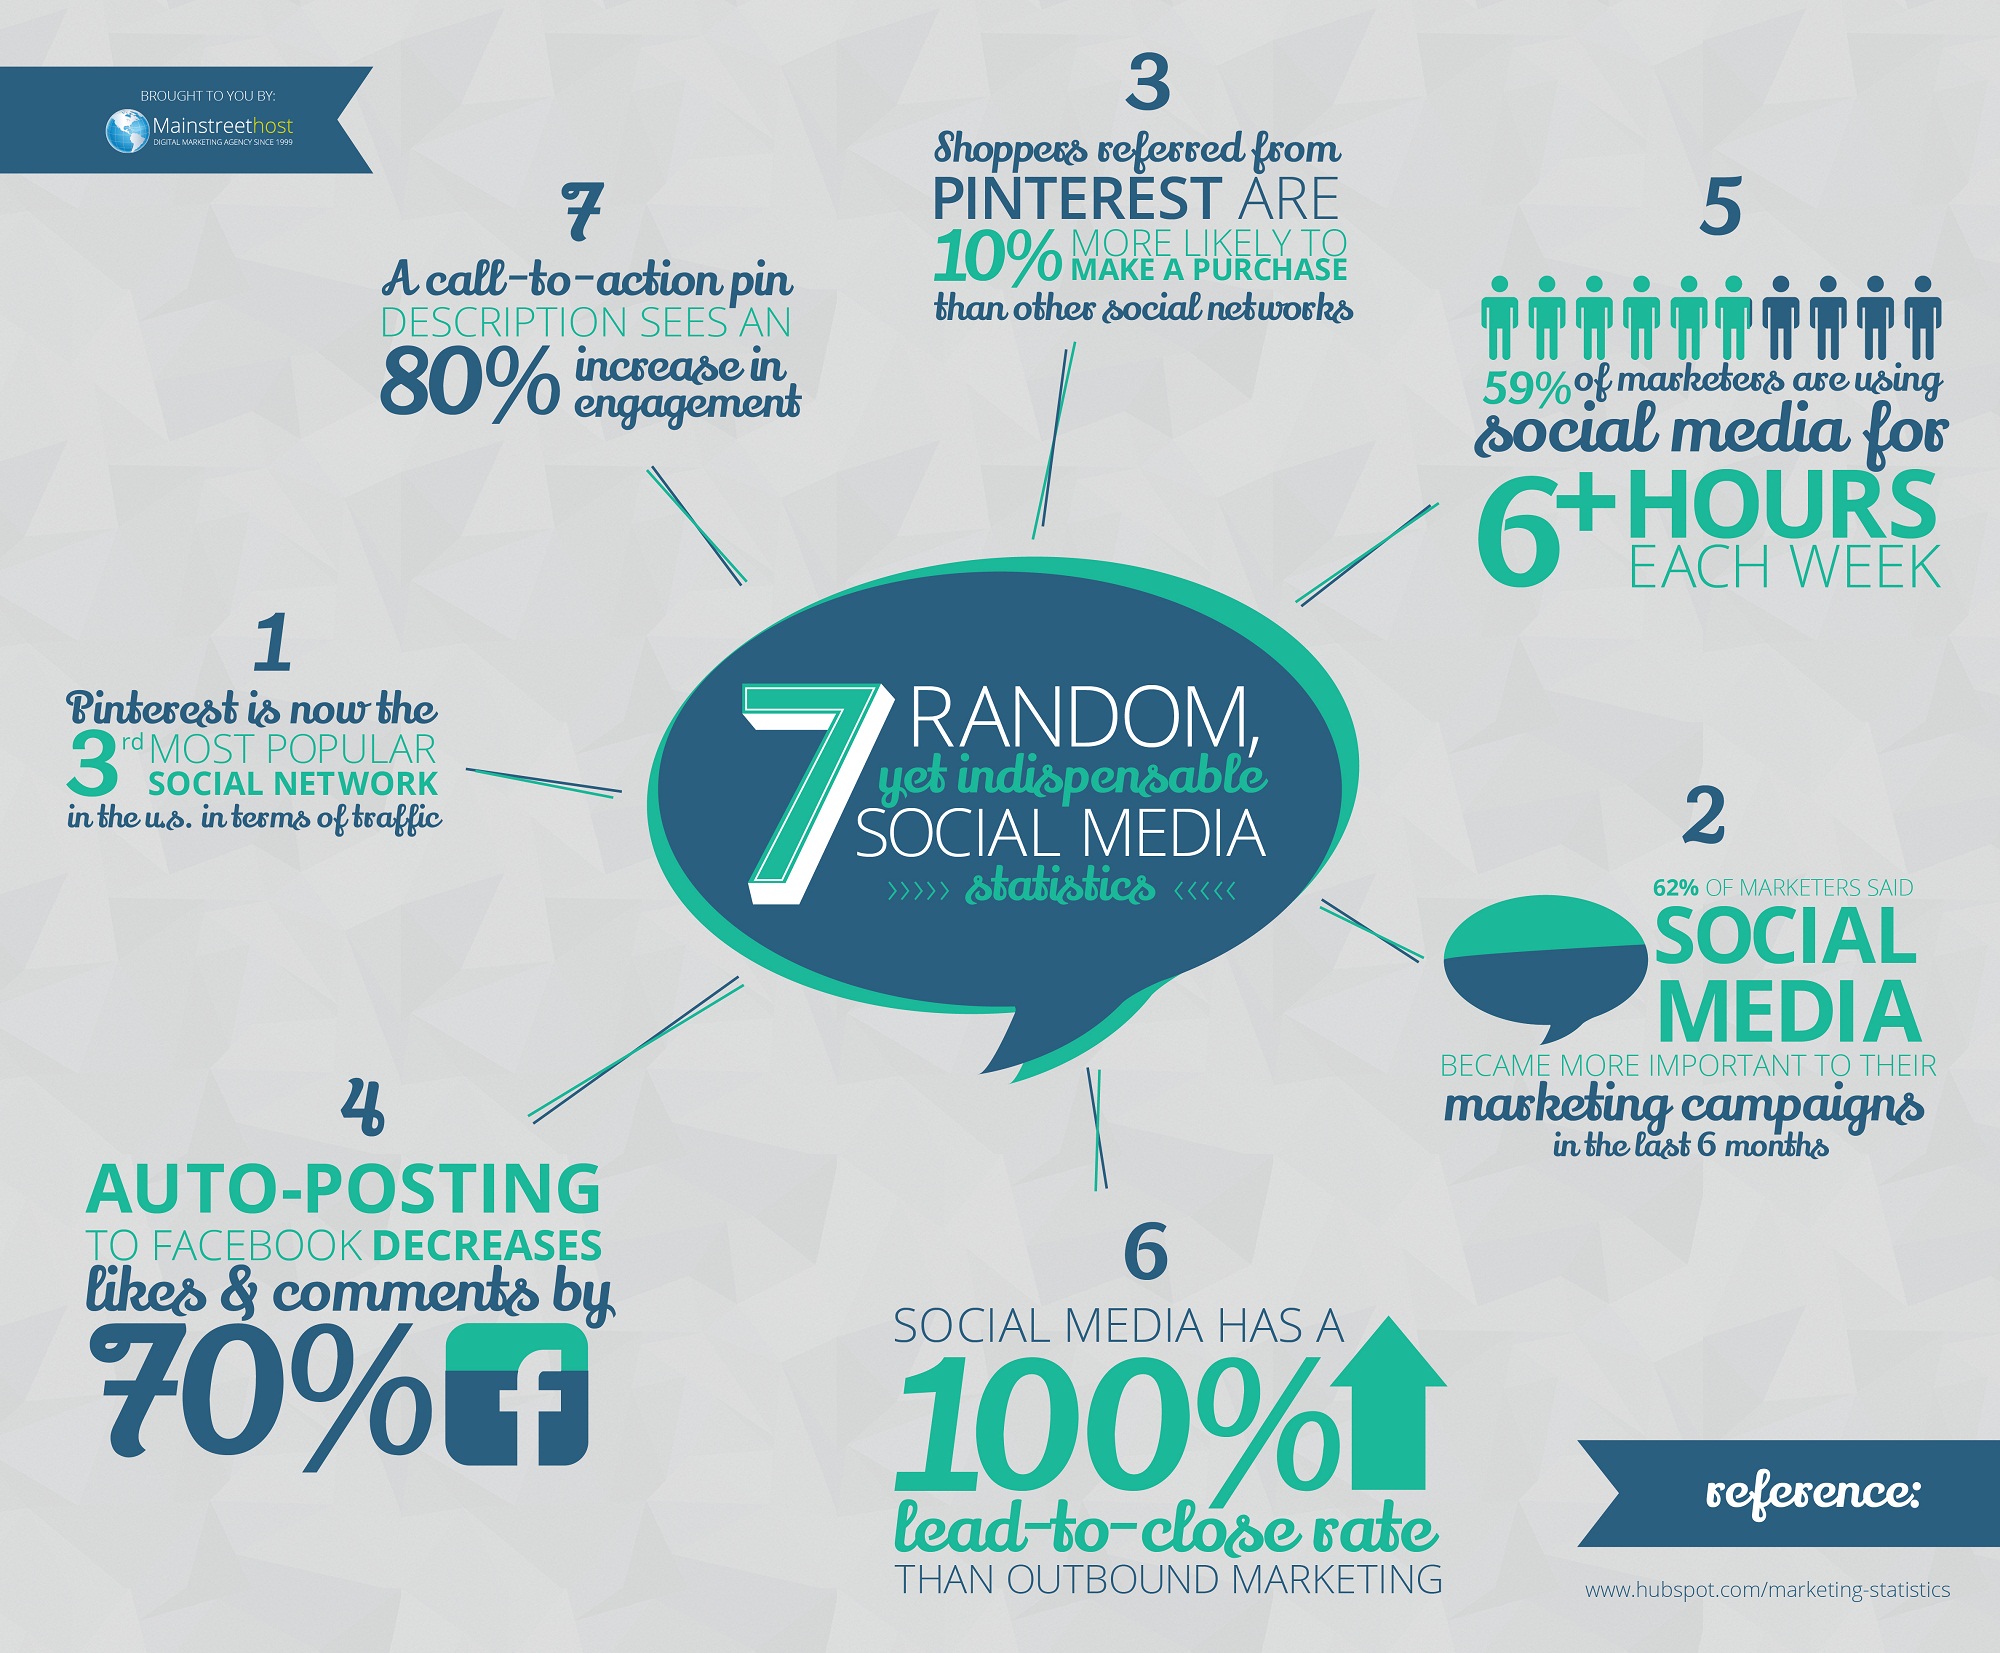 Most Amazing #SocialMedia Marketing Facts - #infographic #pinterest ...